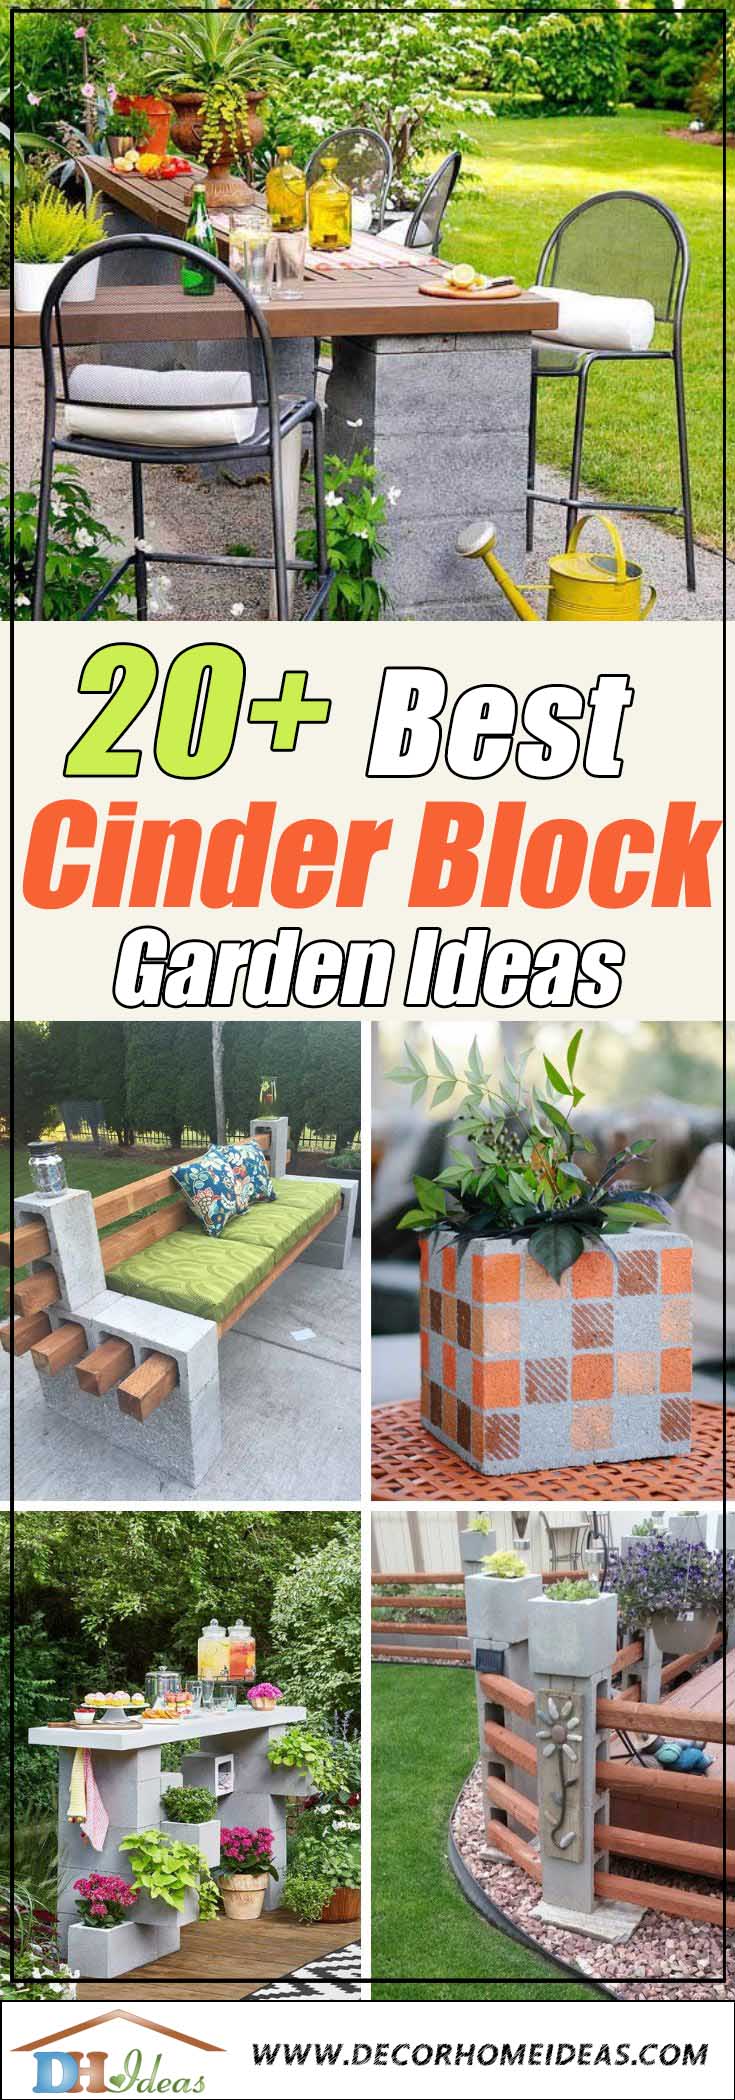 Best Cinder Block Garden Ideas #cinderblock #garden #decorhomeideas